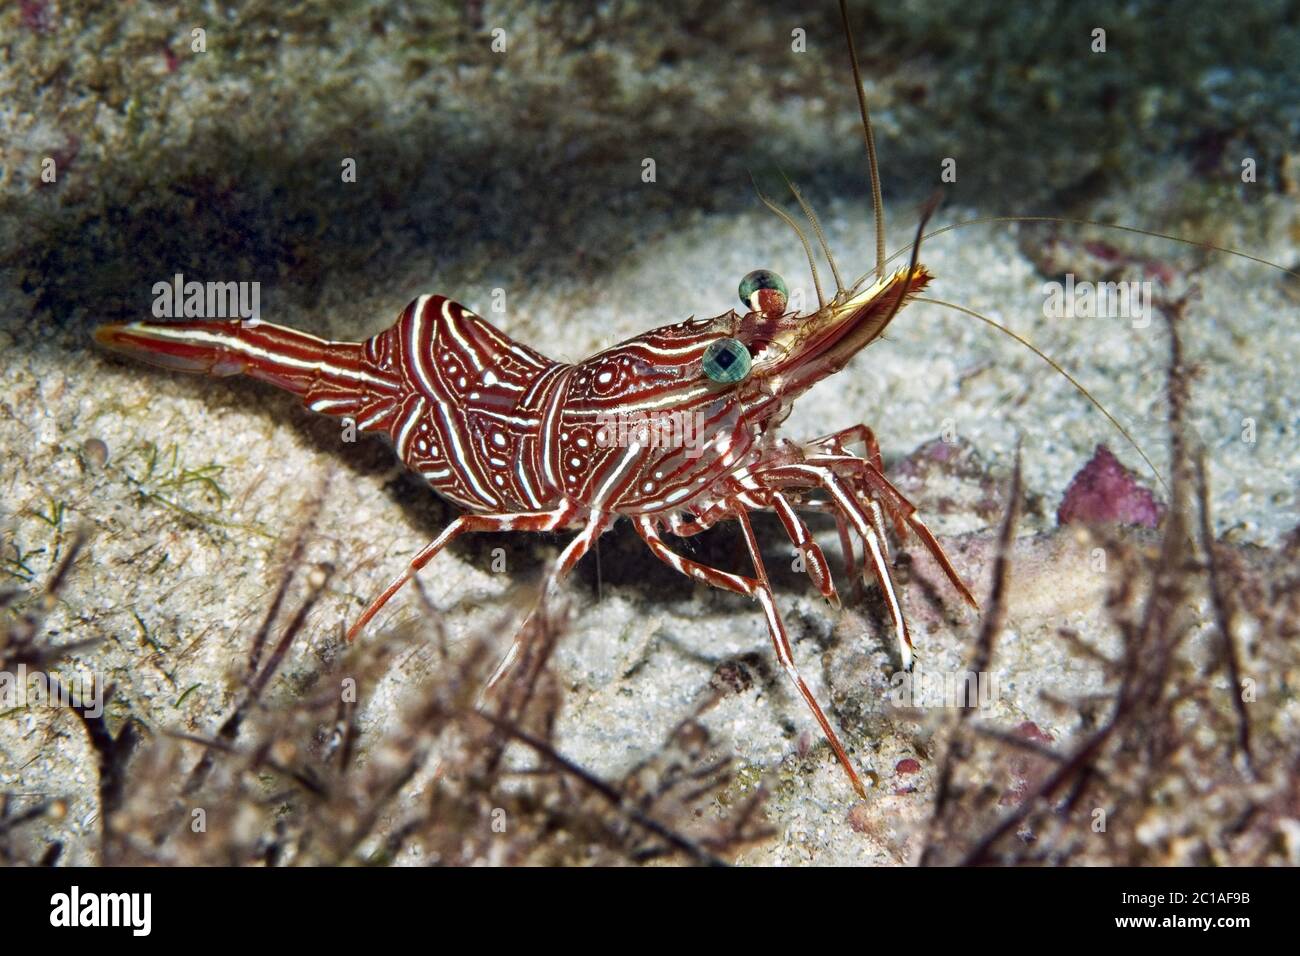 Durban dancing shrimp - Rhynchocinetes durbanensis Stock Photo